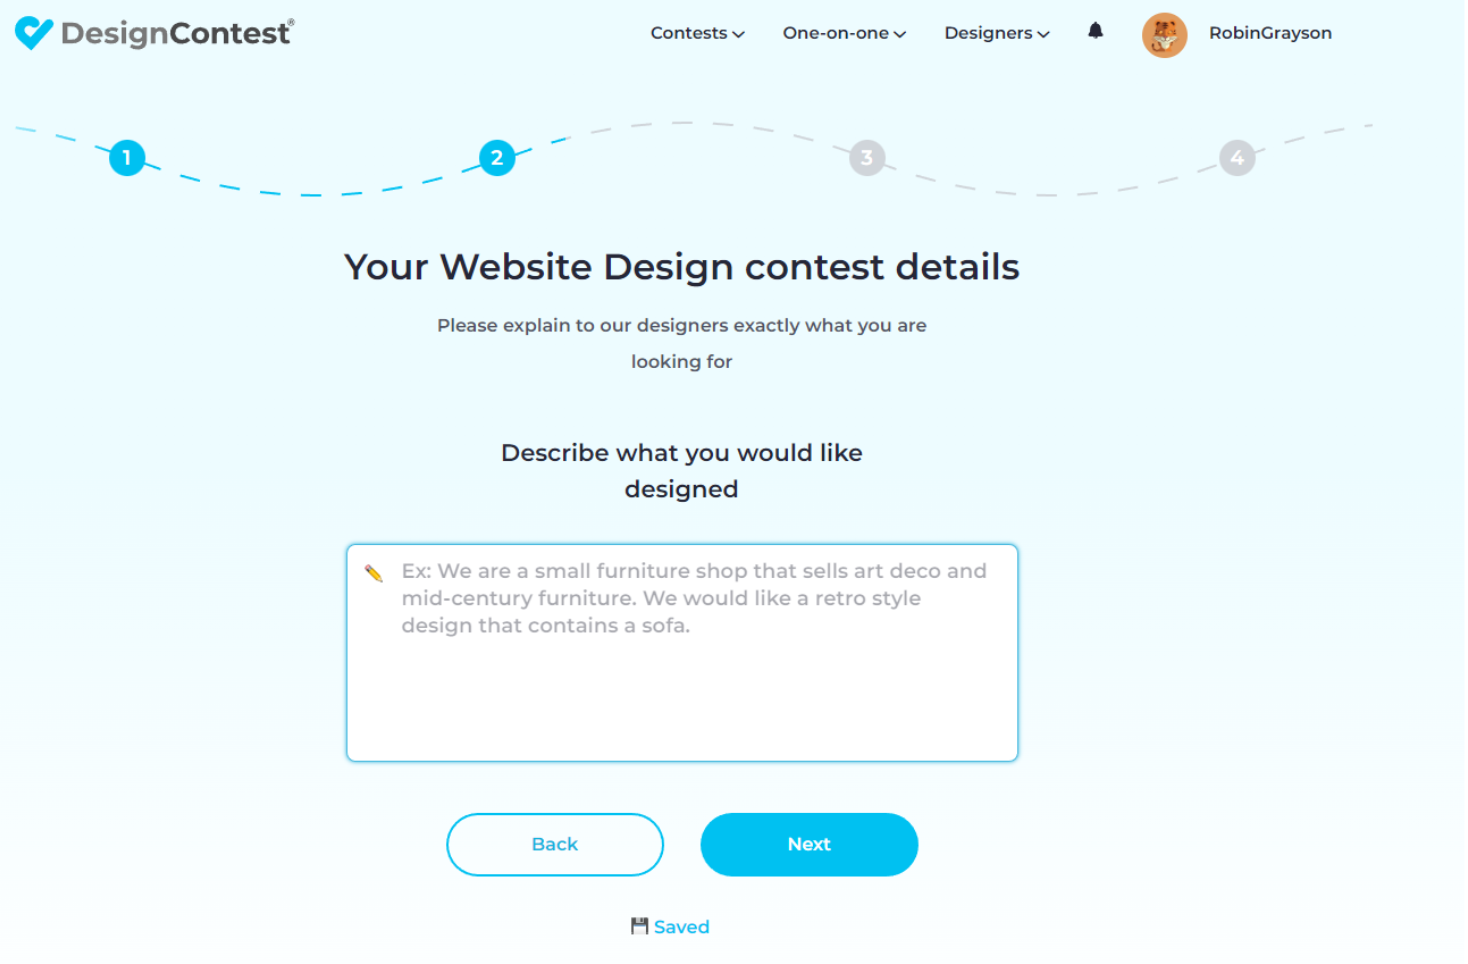 DesignContest contest details